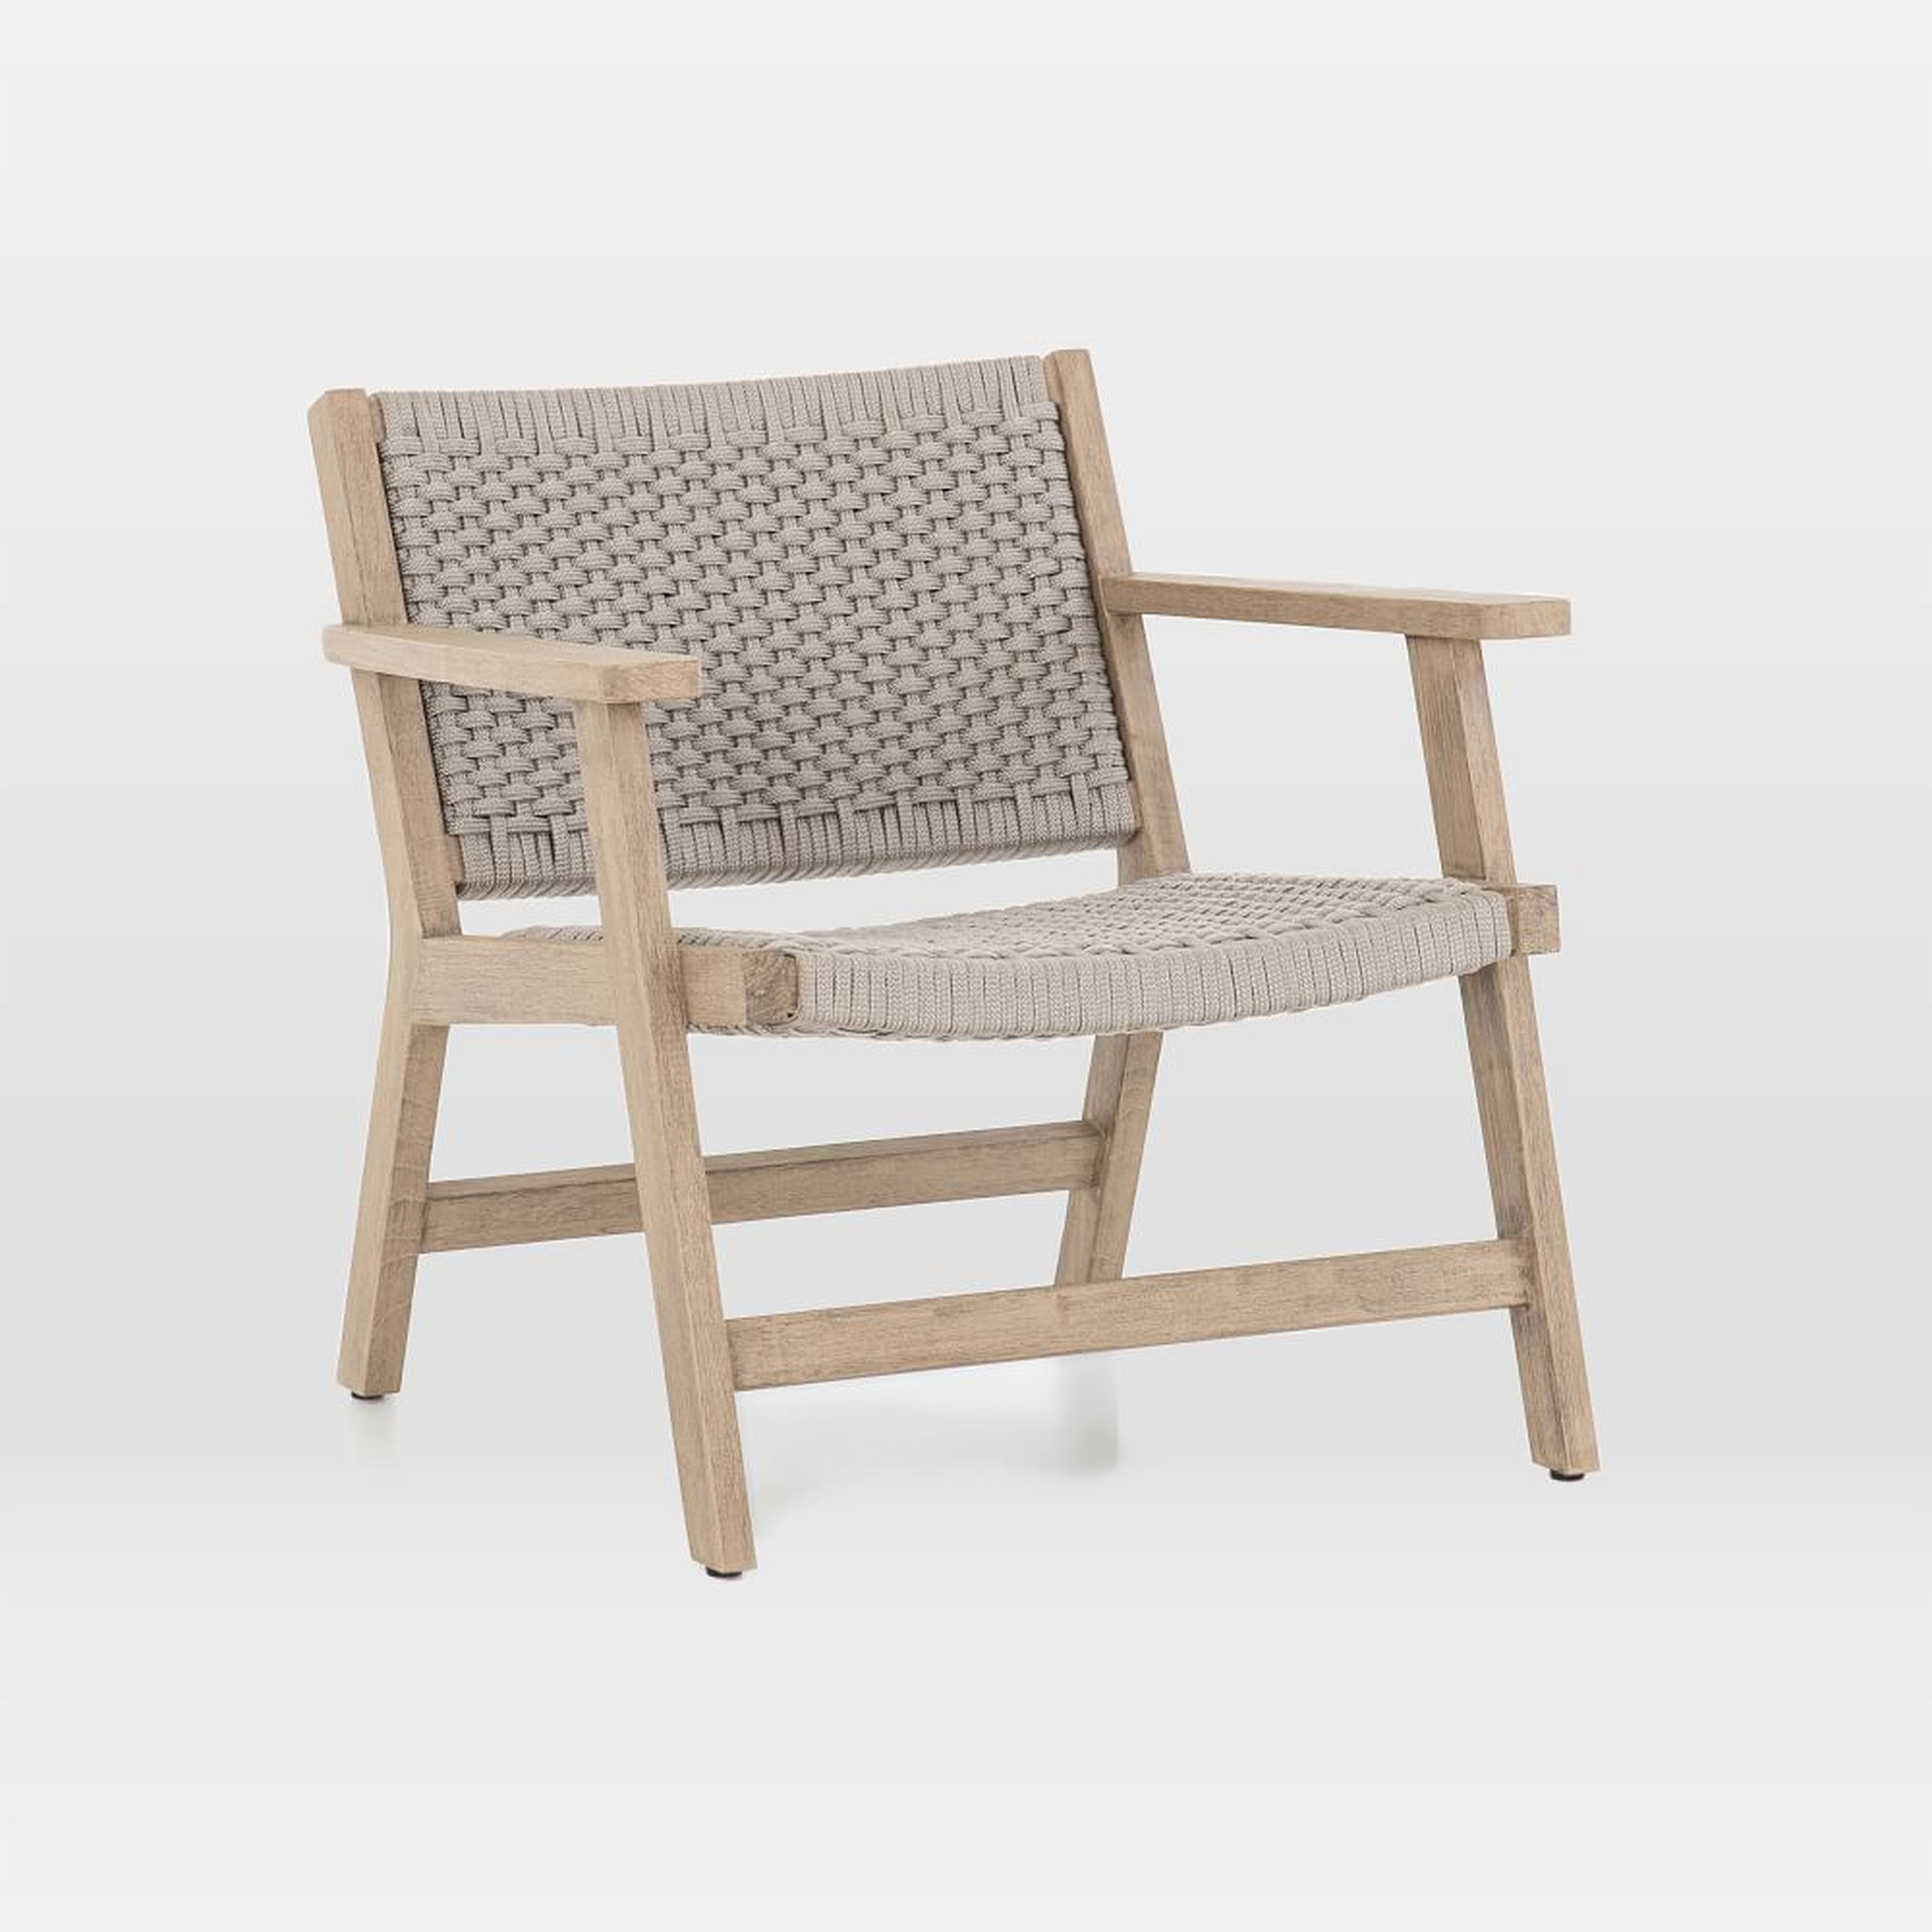 Teak Wood + Rope Outdoor Chair, Washed Brown - West Elm